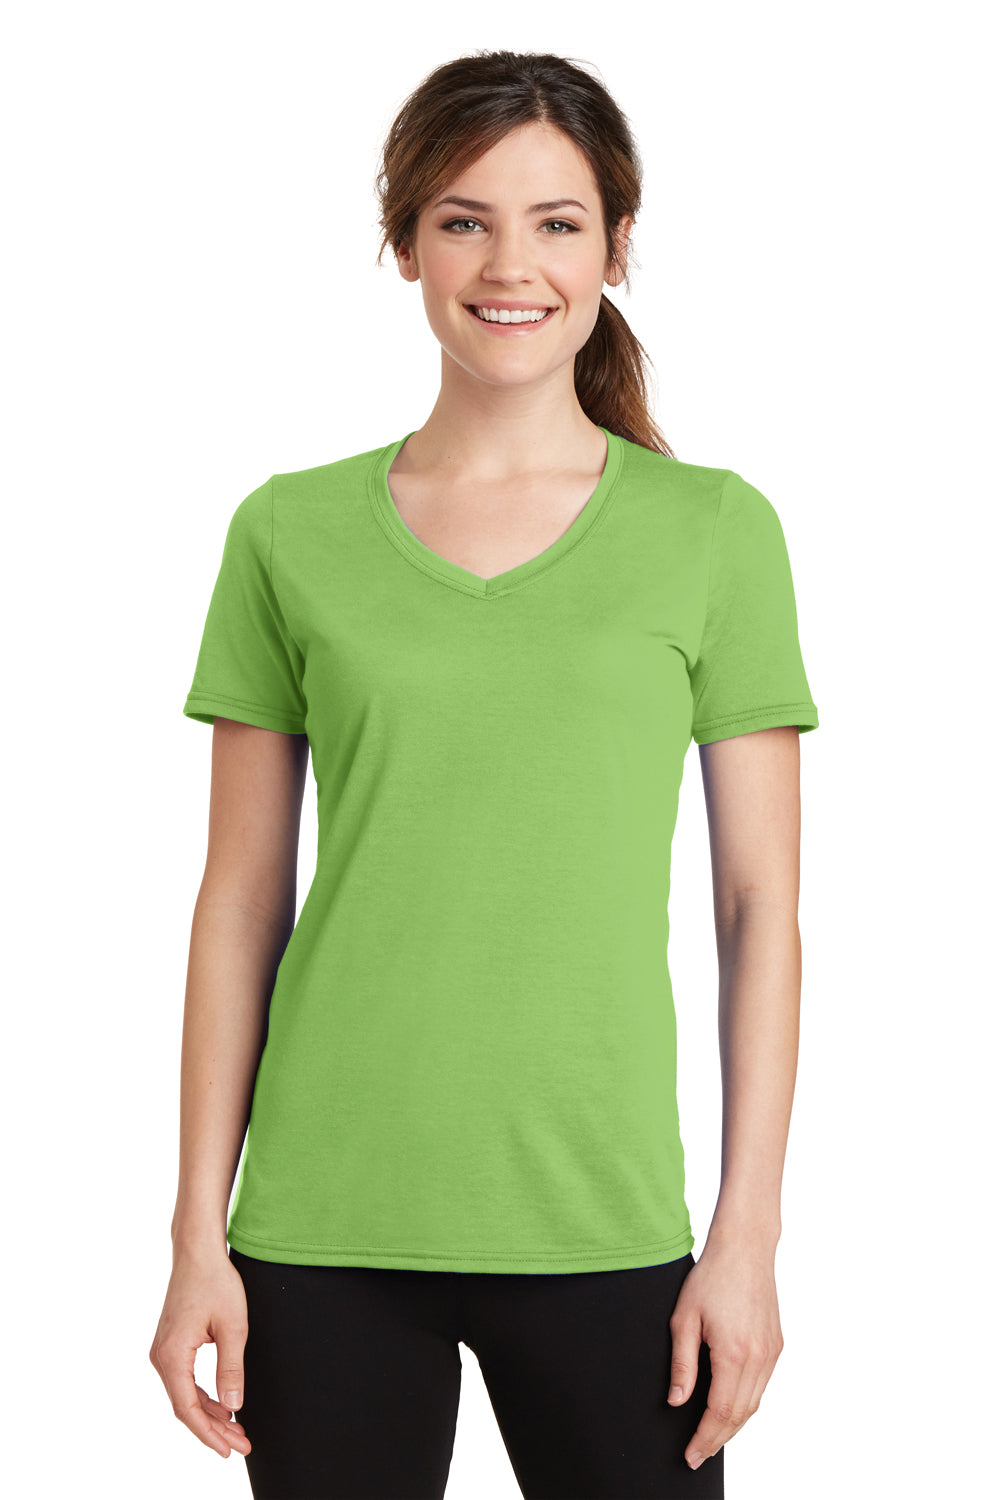 Port & Company LPC381V Womens Dry Zone Performance Moisture Wicking Short Sleeve V-Neck T-Shirt Lime Green Front